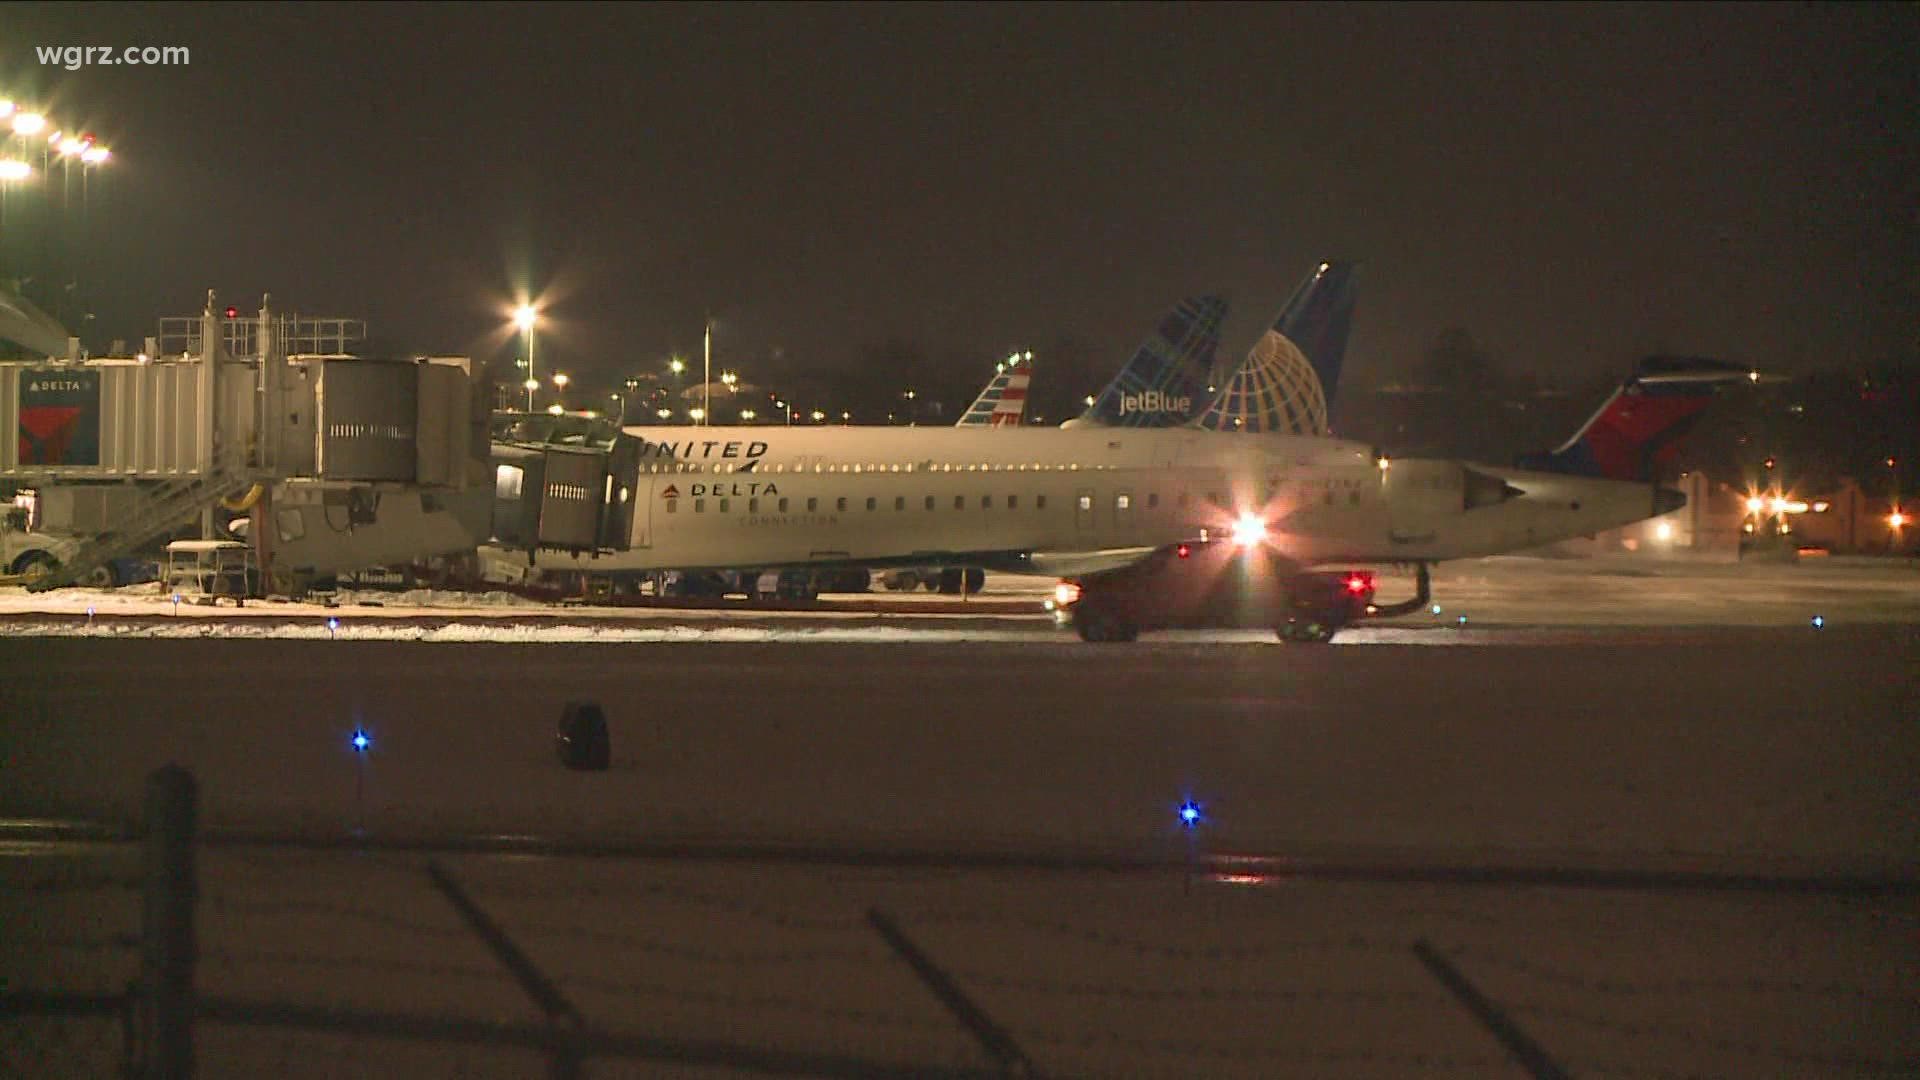 Emergency crews were called to Buffalo Niagara International Airport around 9 p.m. Saturday to assist.